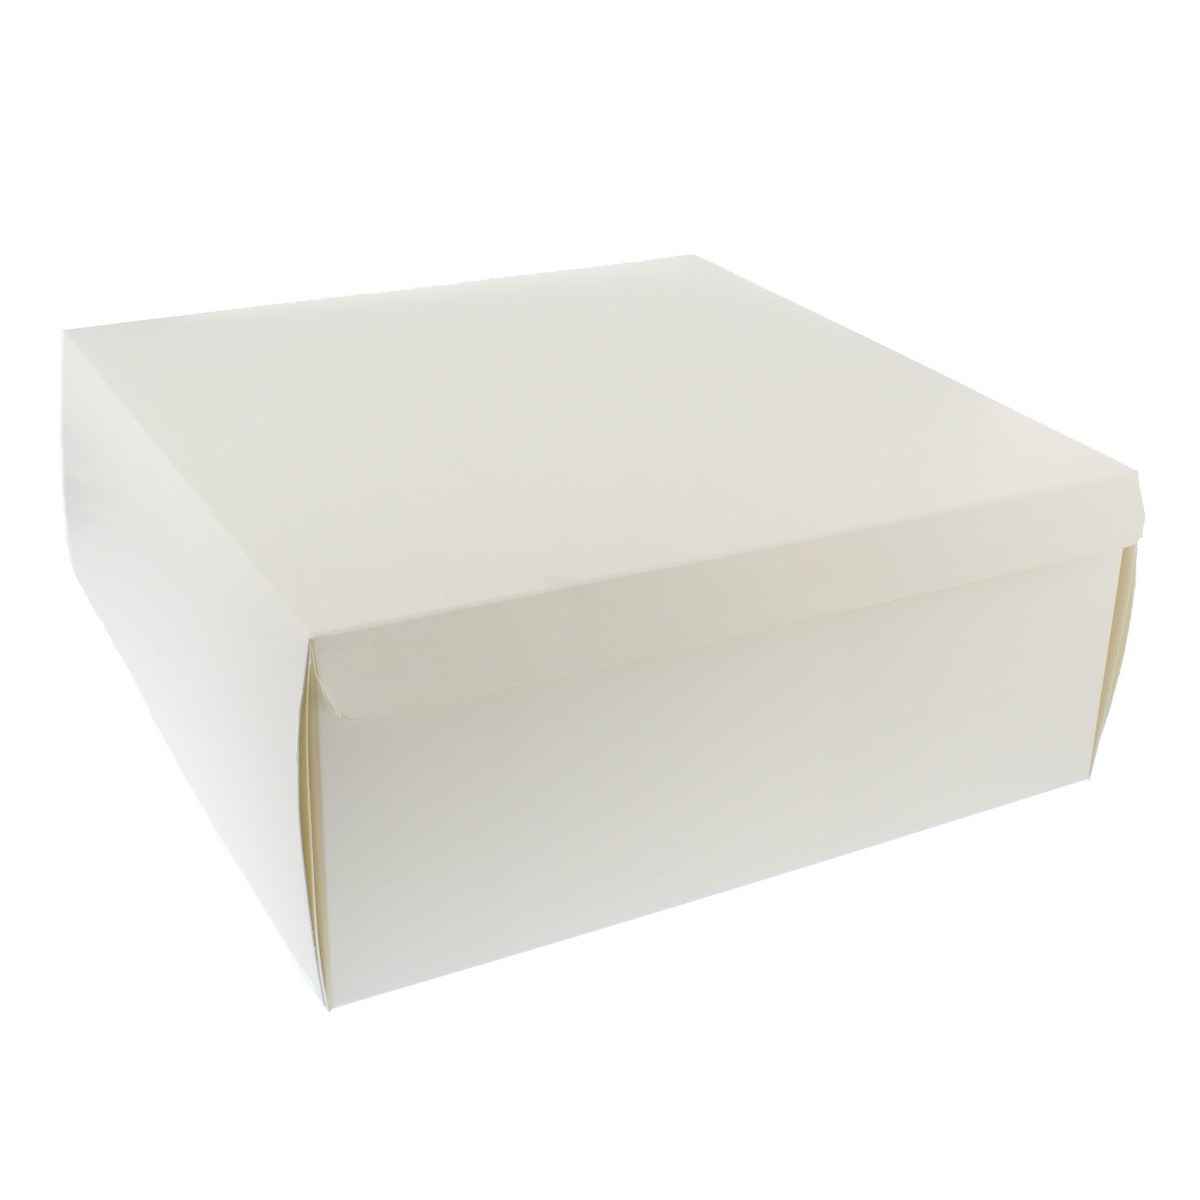 White Cake Boxes 6 X 6 X 4 Inch